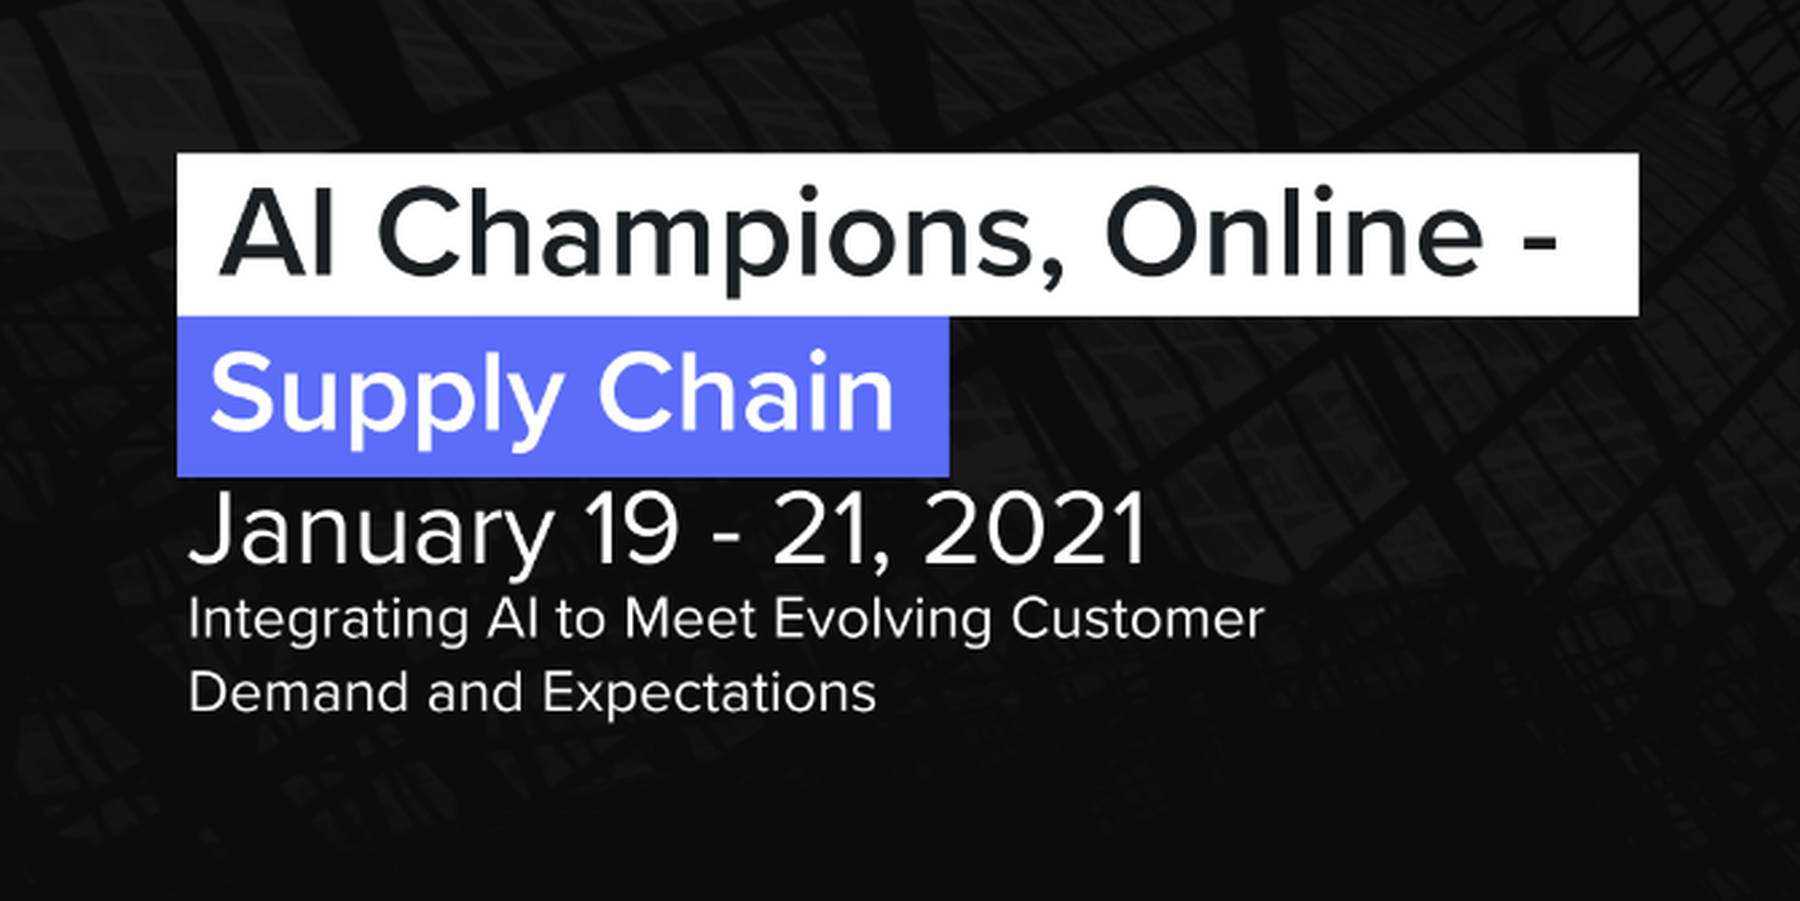 AI Champions - Supply Chain 2021